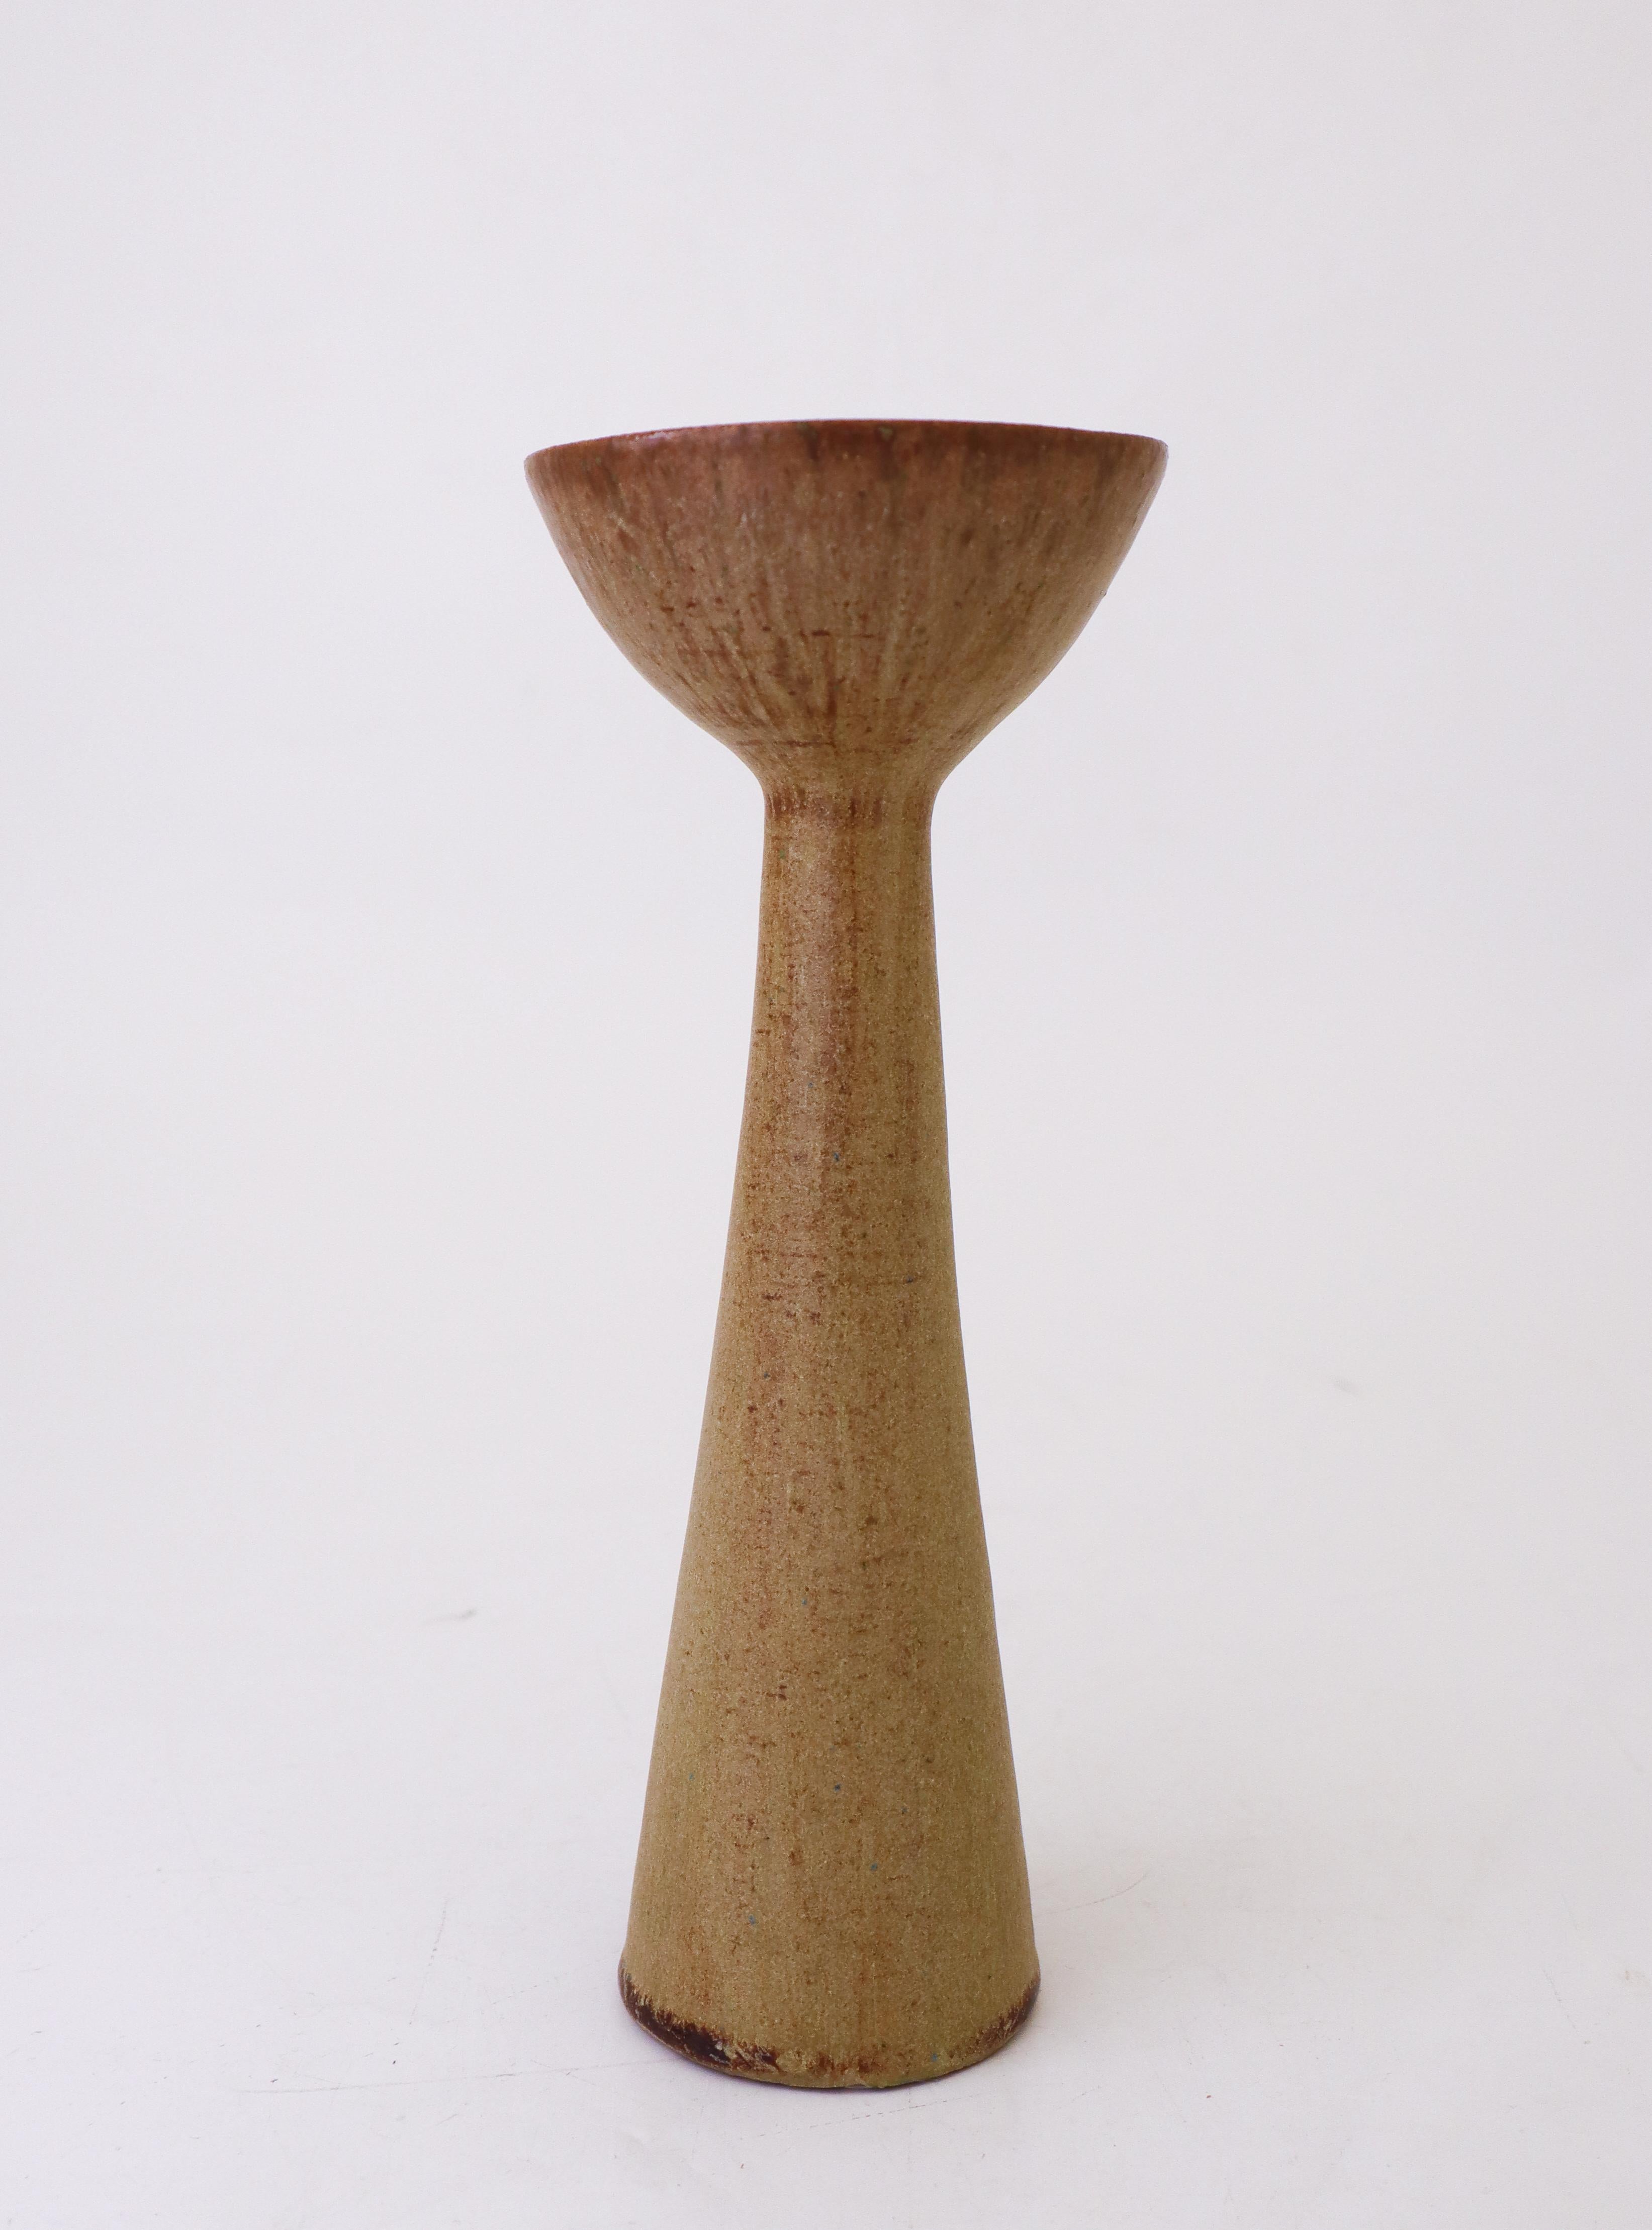 Scandinavian Modern Vase, Olle Alberius, Midcentury Vintage, Pupil's Work - Scandinavian Design For Sale